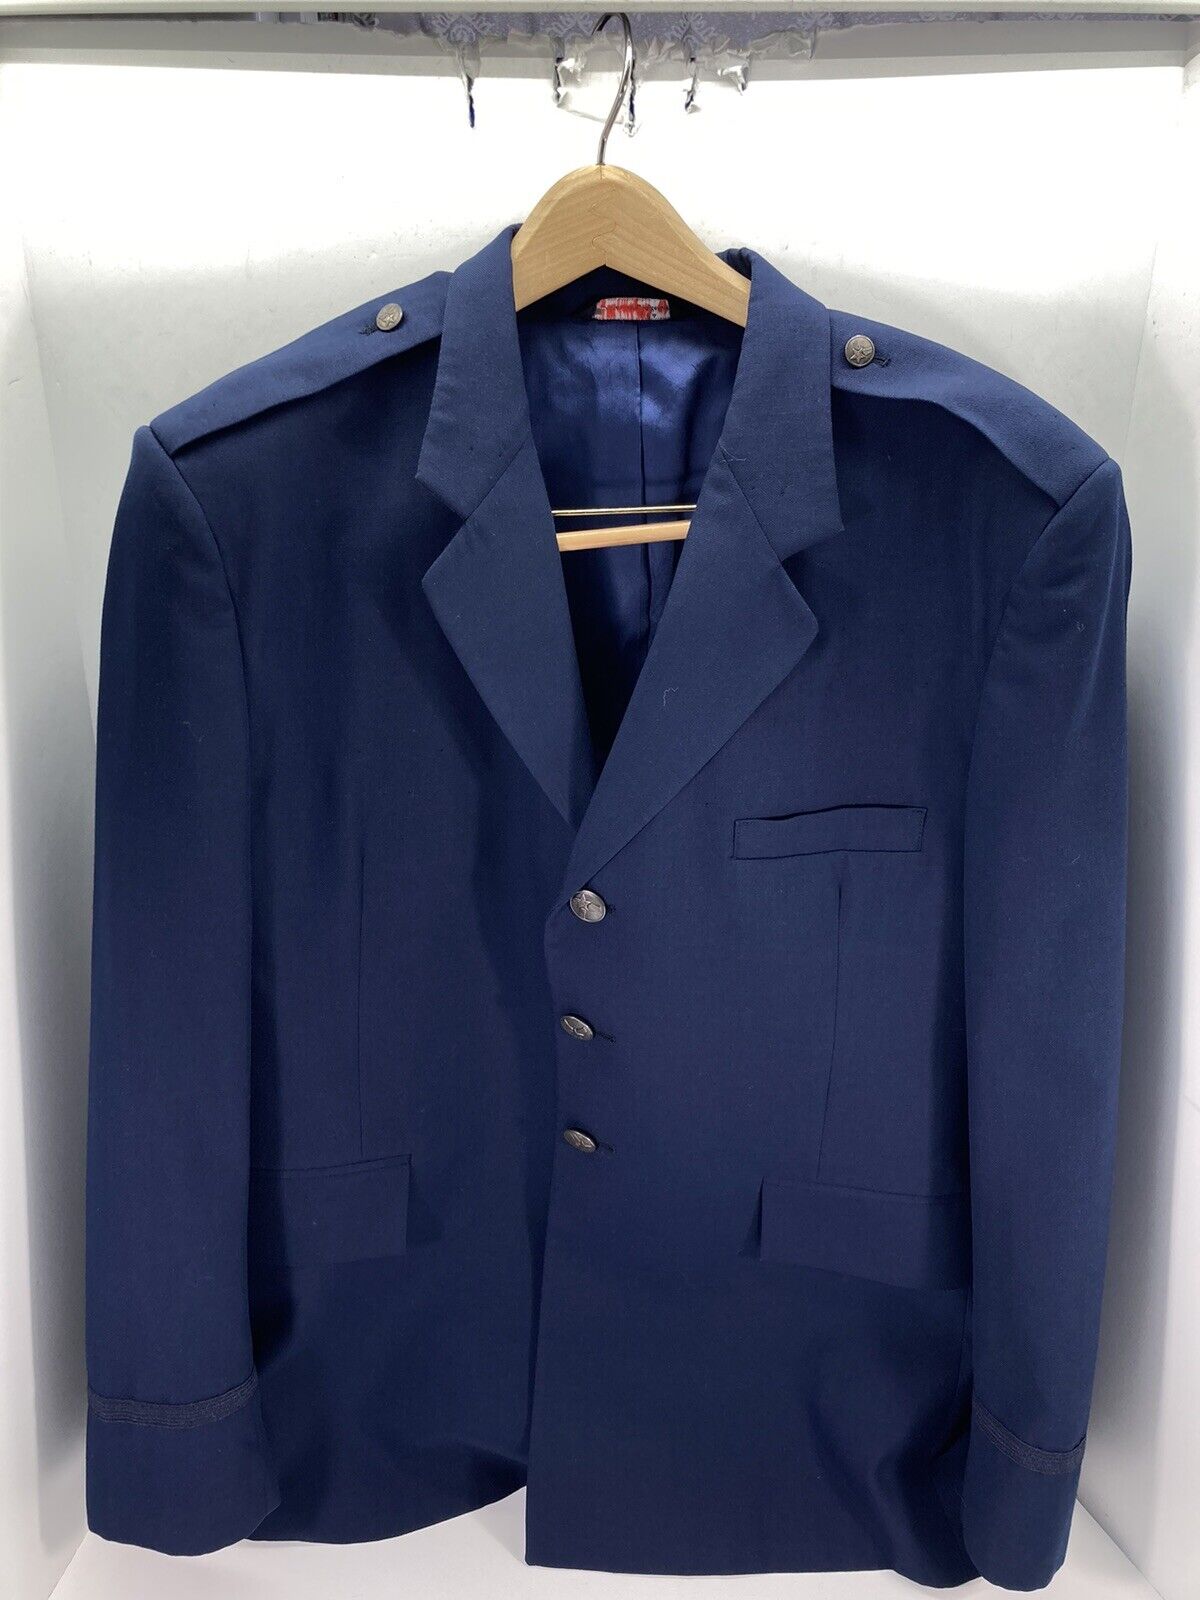 USAF Air Force Officer Service Dress Coat Jacket Men 44R Blue 3 Button Uniform